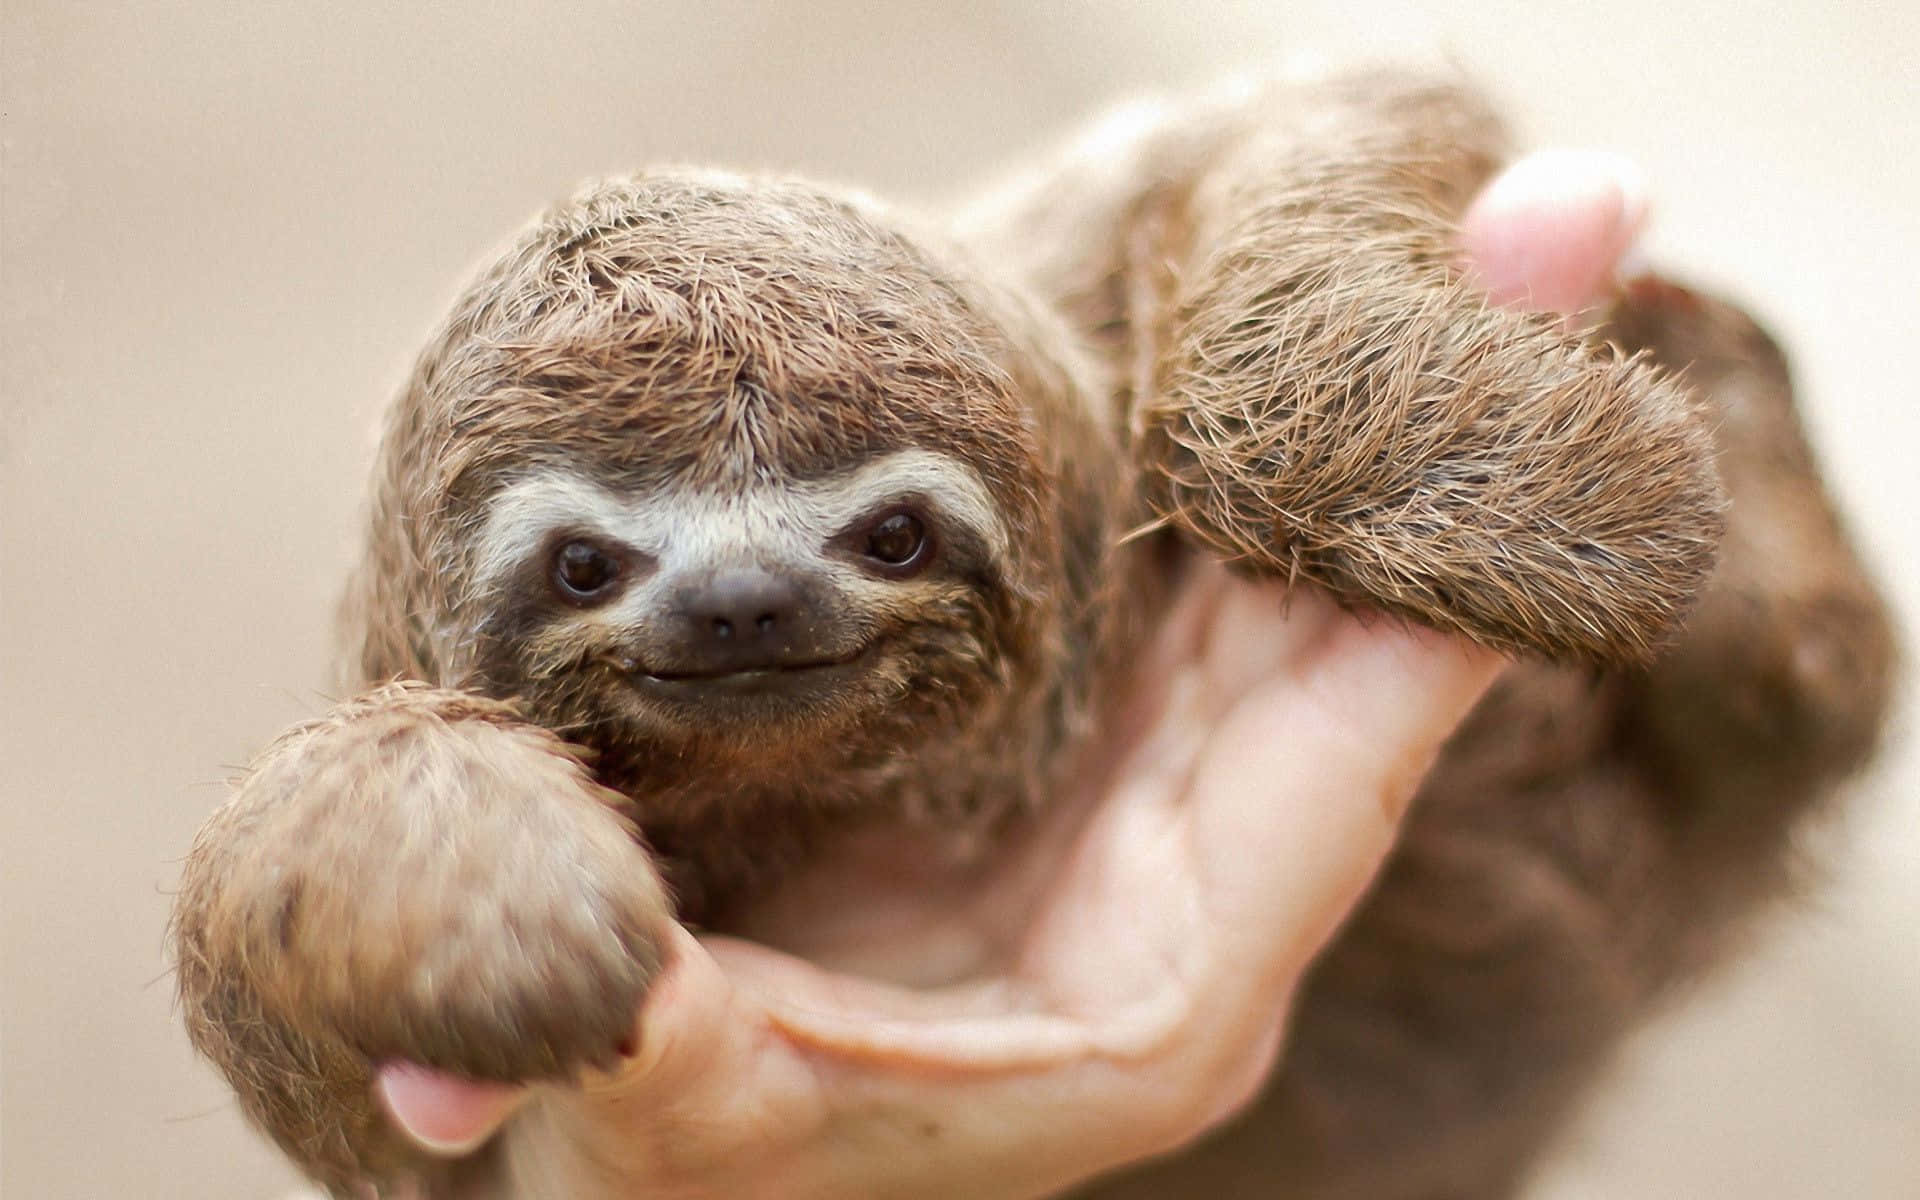 A baby sloth enjoying a sunny day